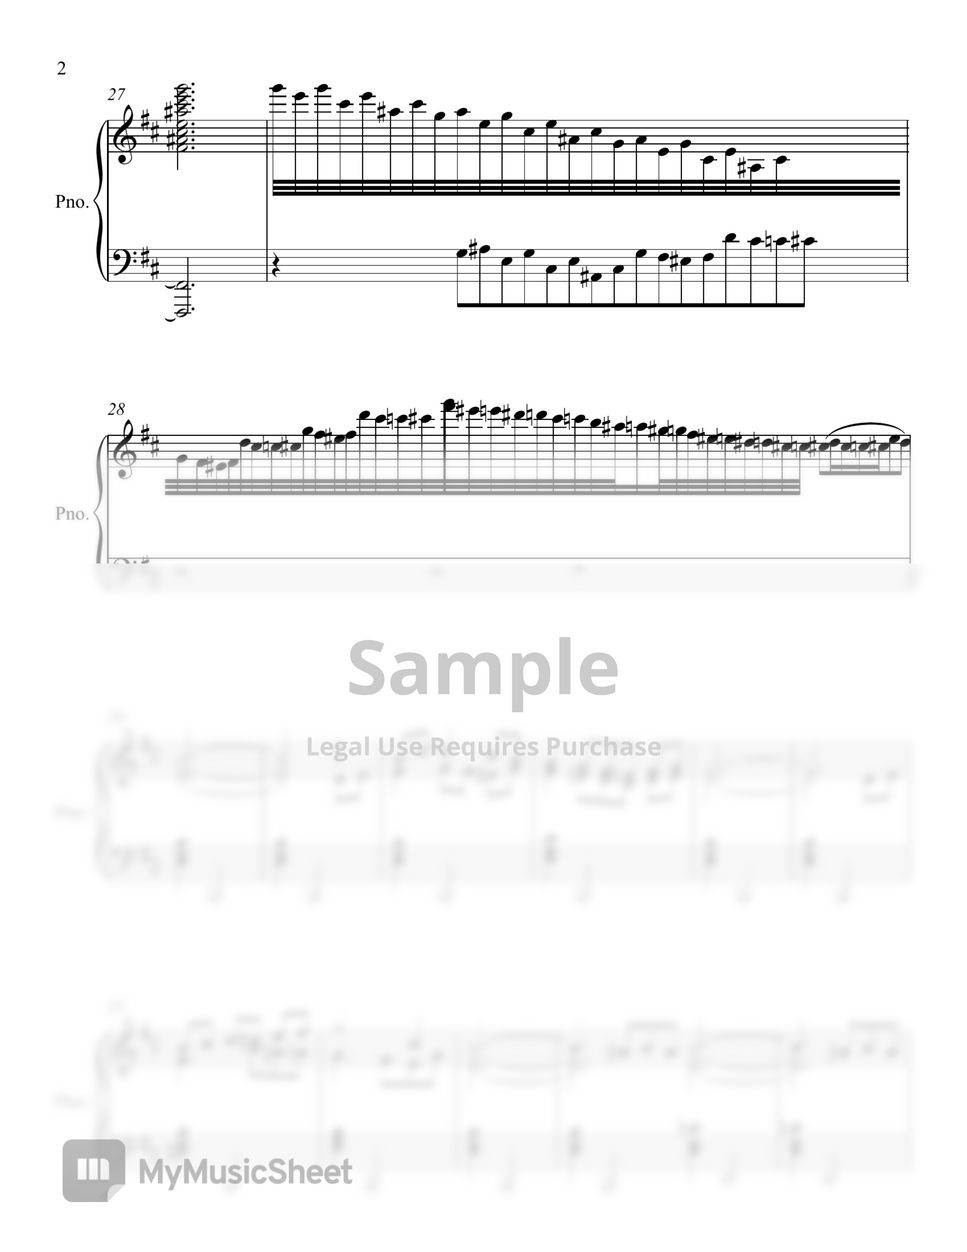 S. Rachmaninoff - Suite In D minor - Lento by Jonnas Heisenberg